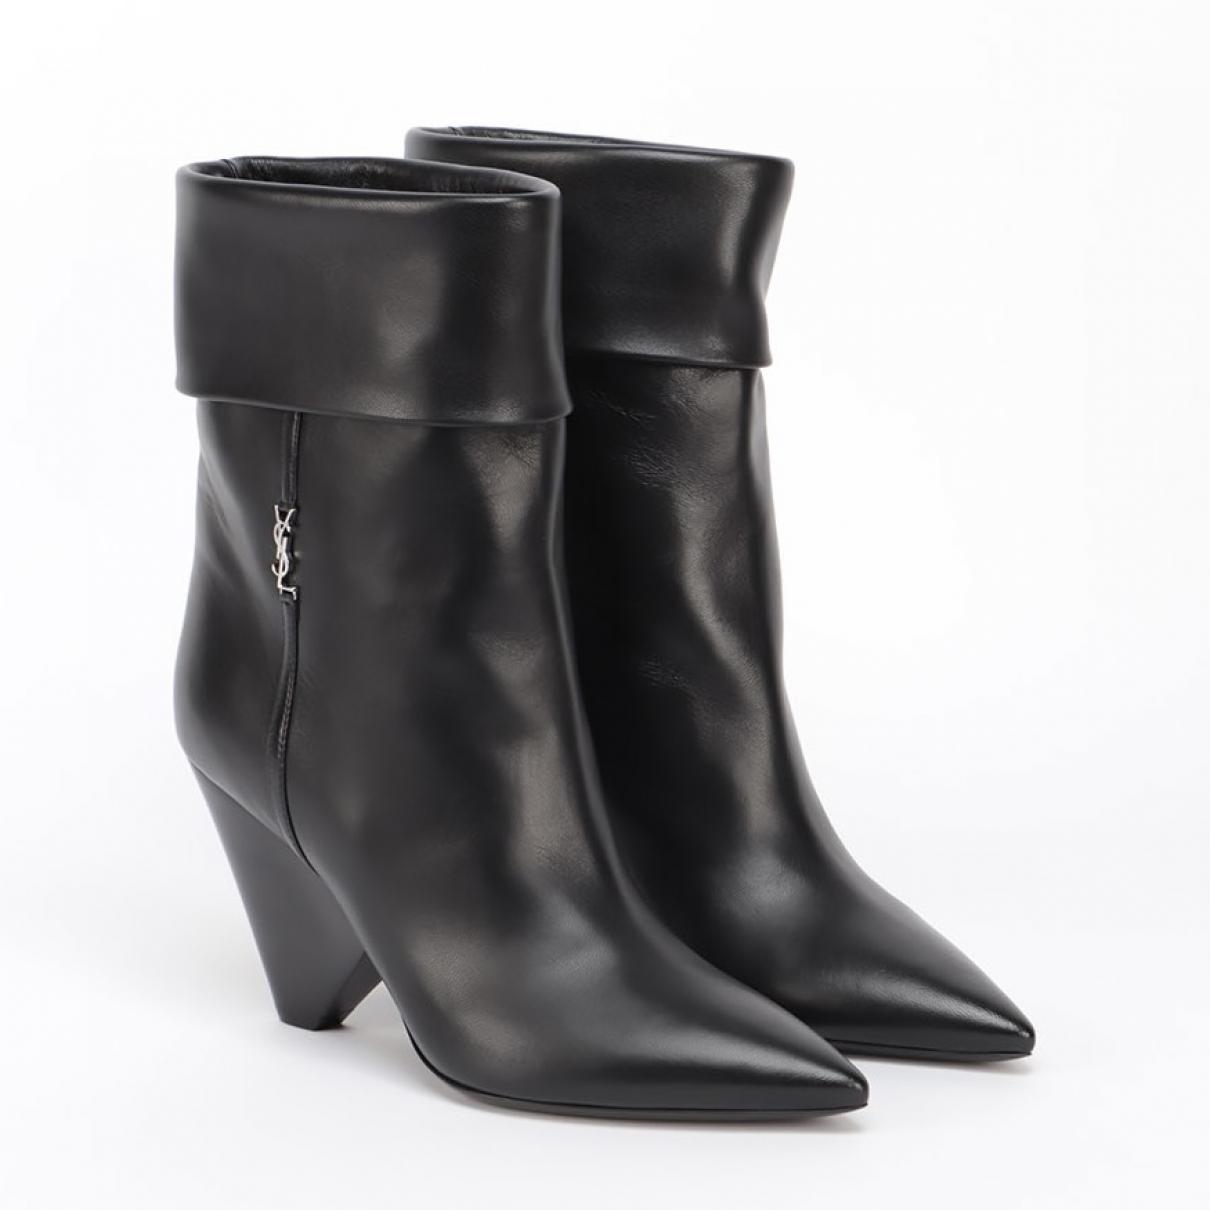 Niki leather boots - 2